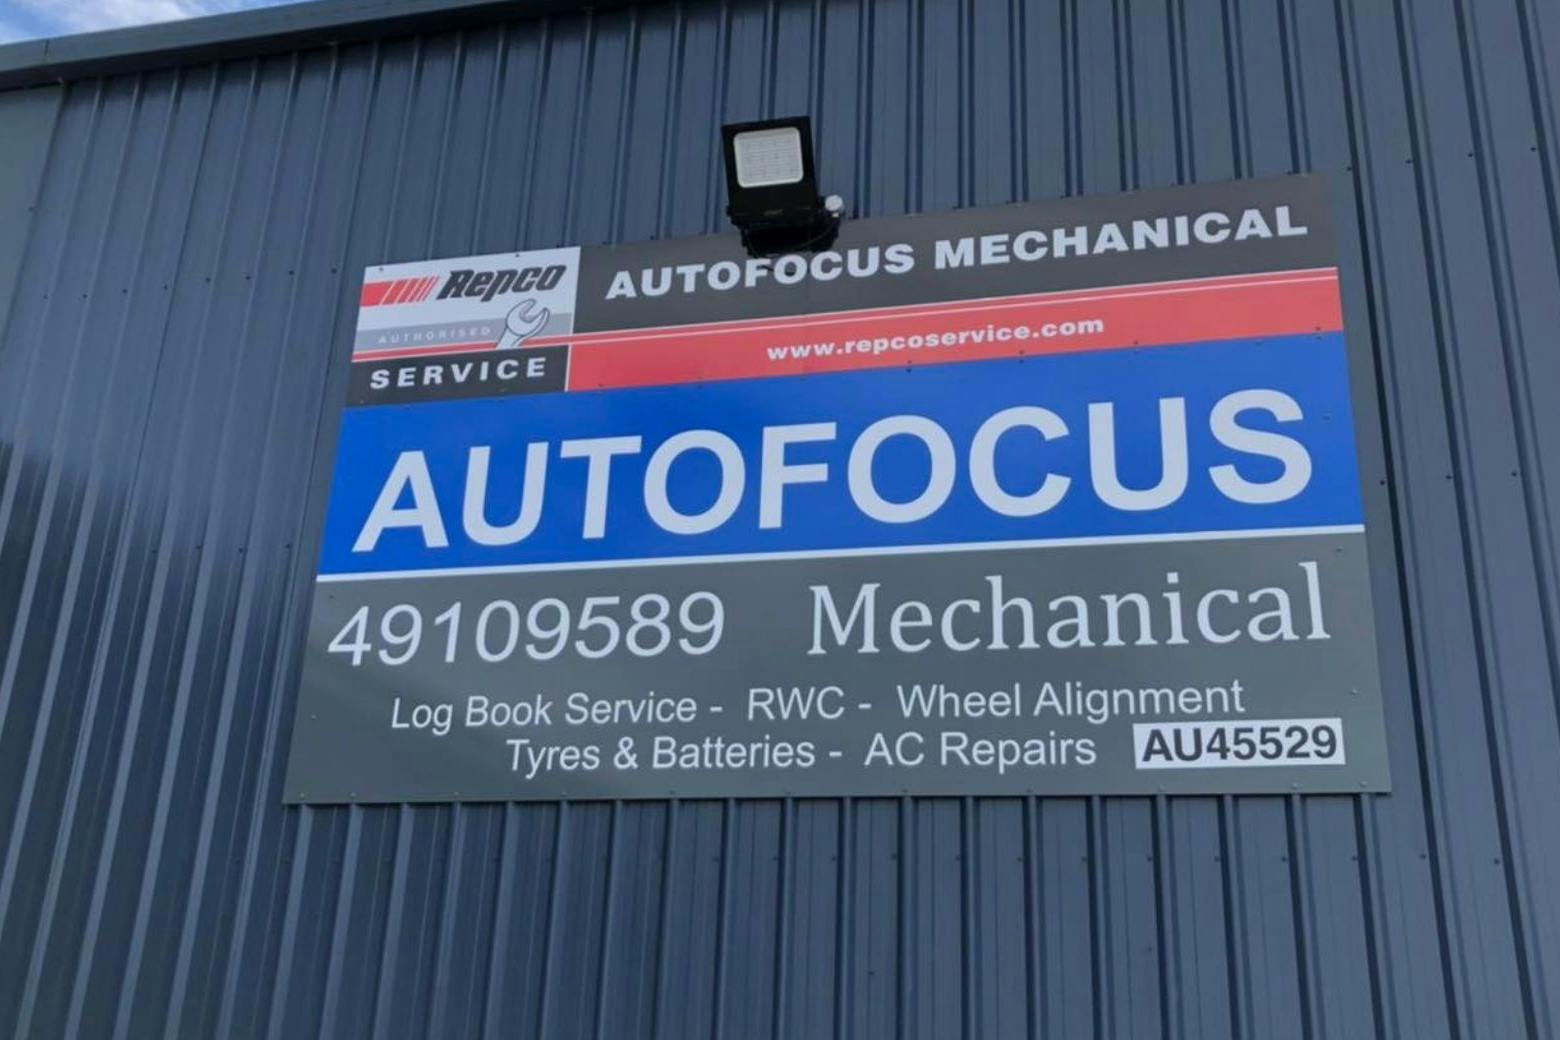 Auto Focus Mechanical profile photo